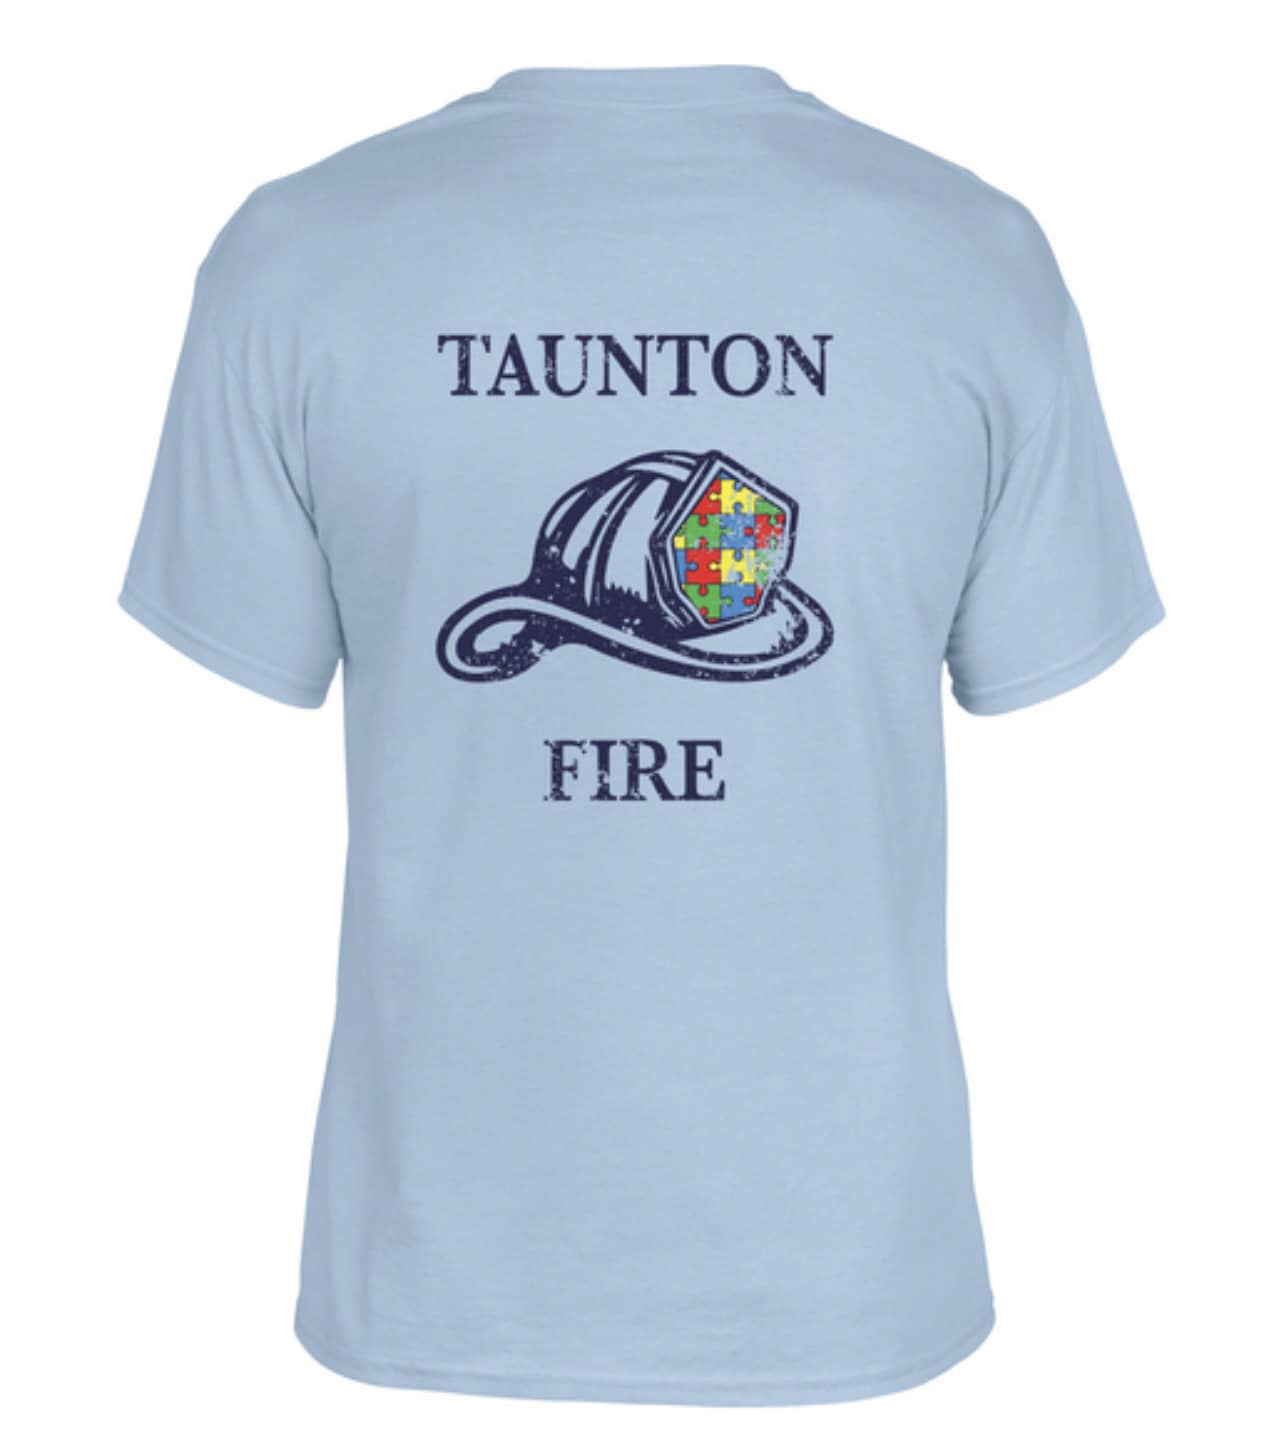 Taunton Fire Department autism t-shirt